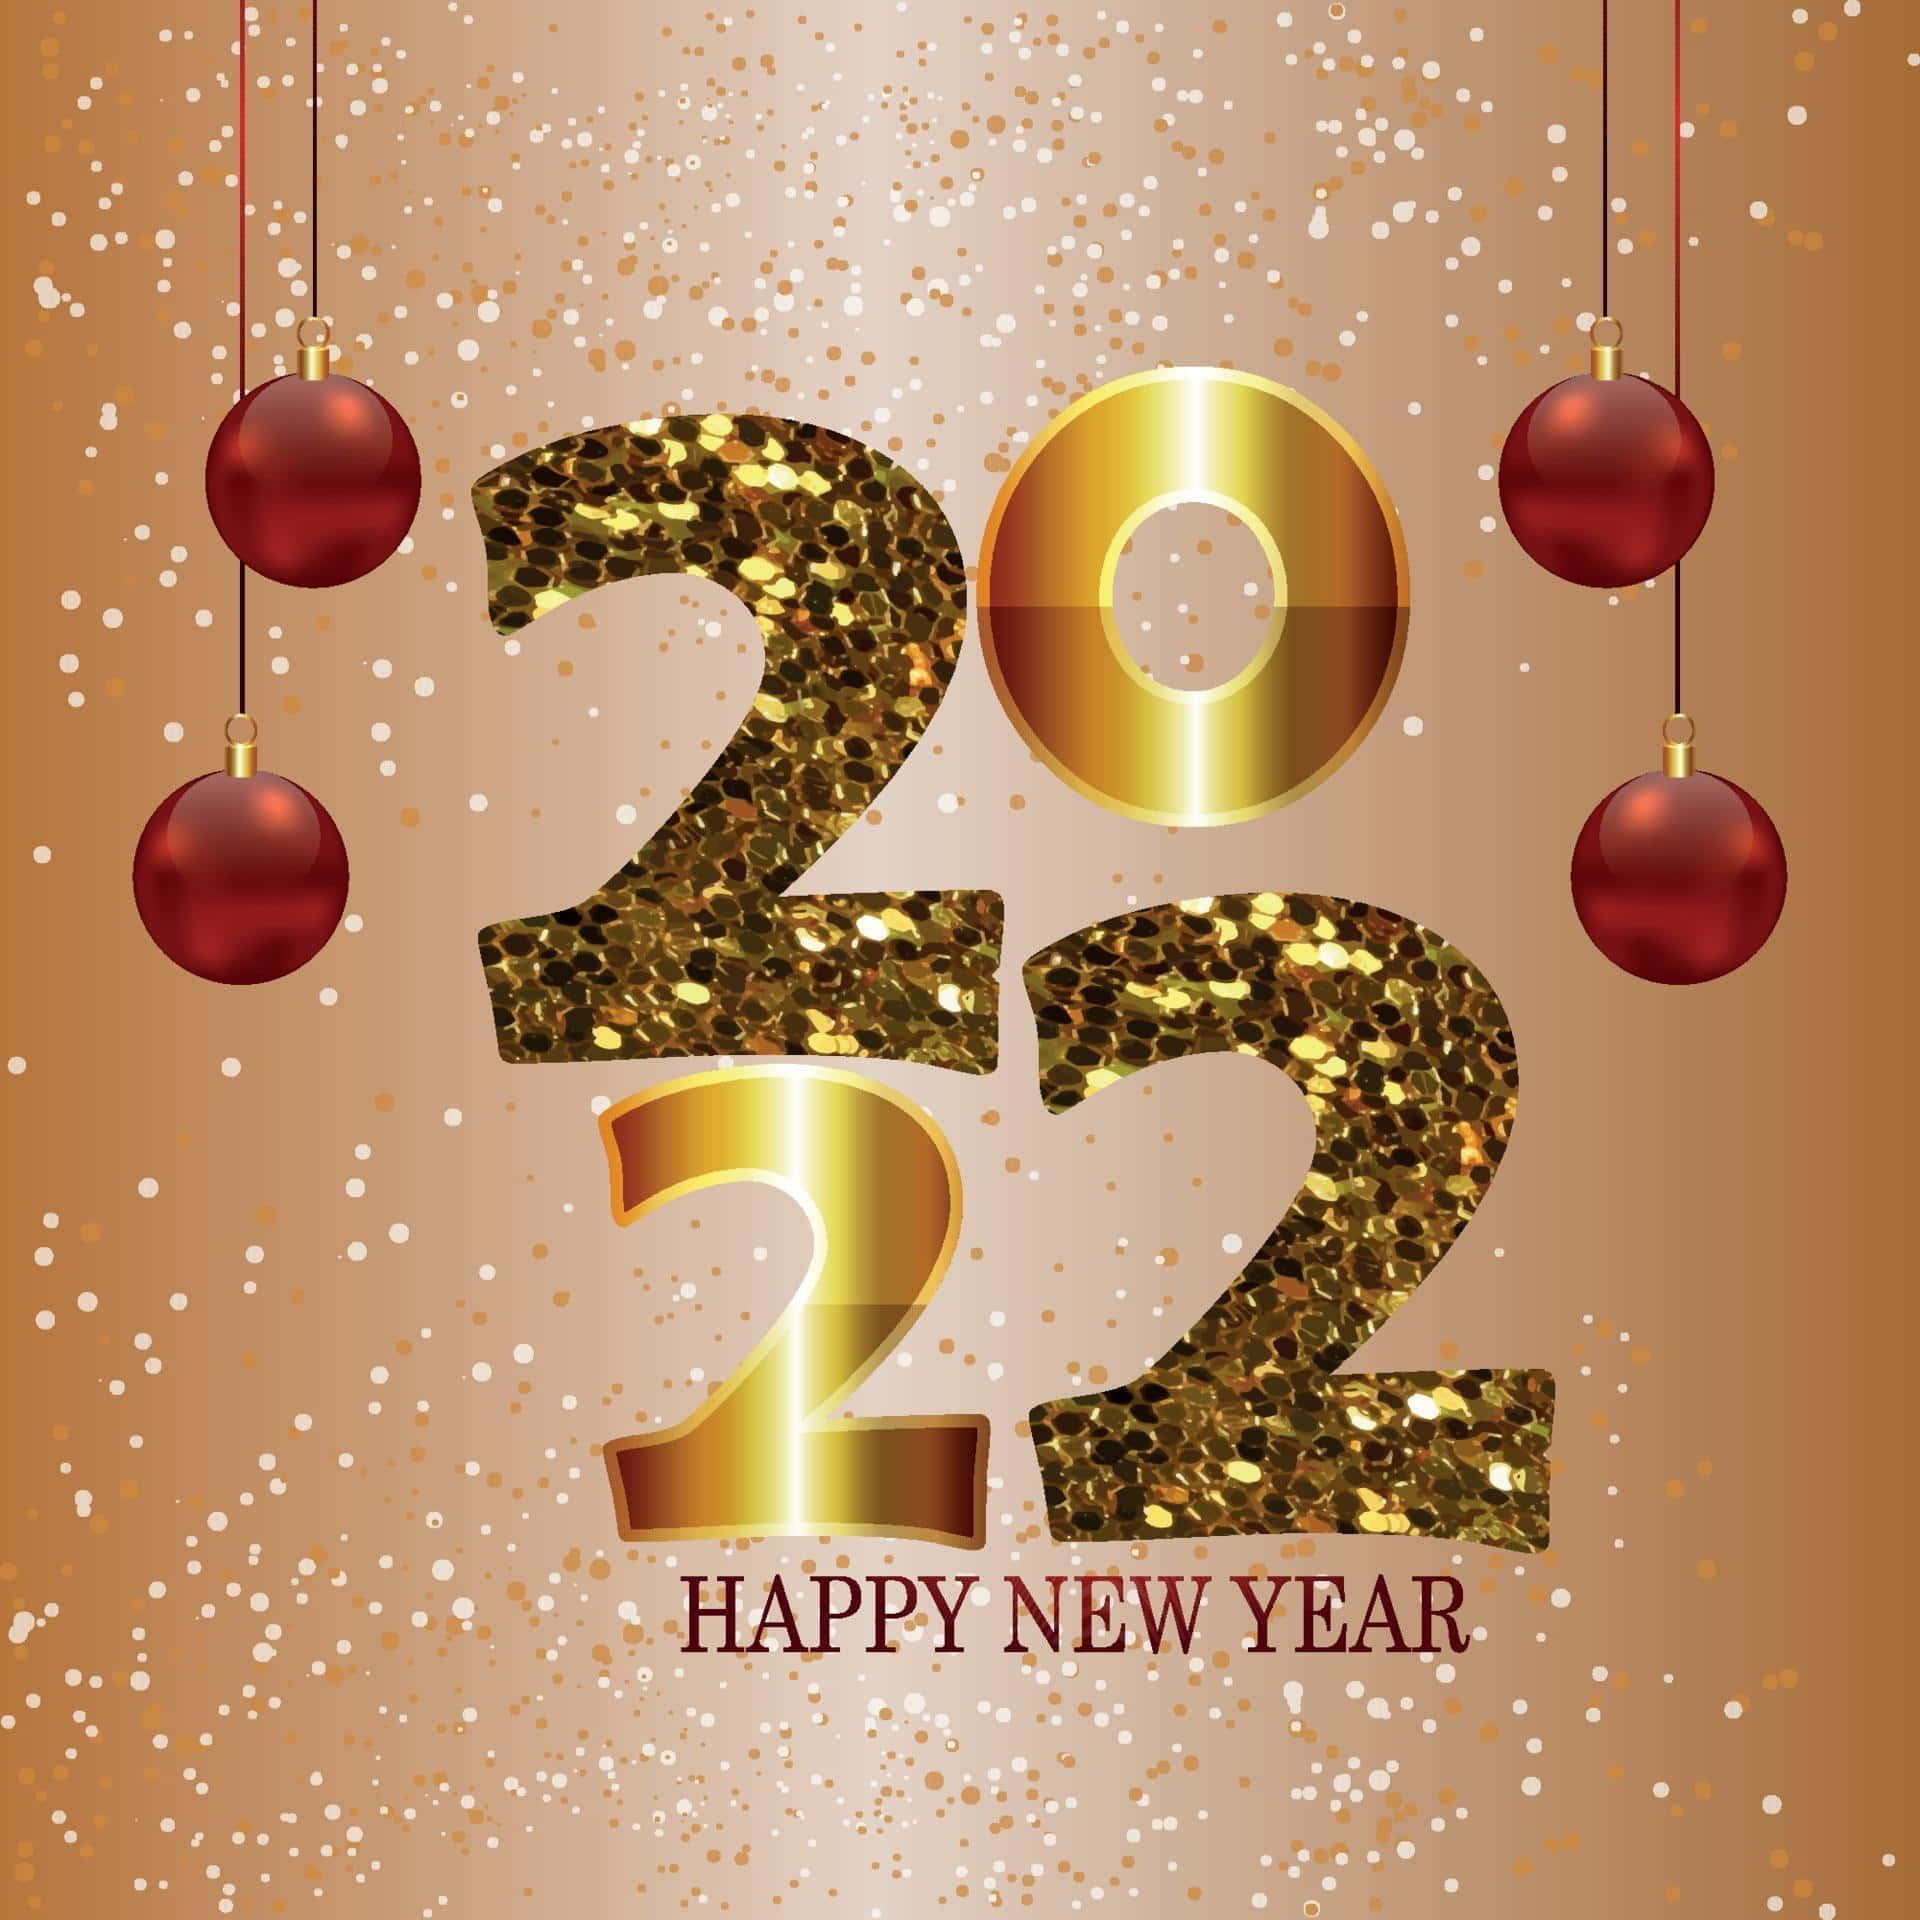 Celebrate Happy New Year 2022!